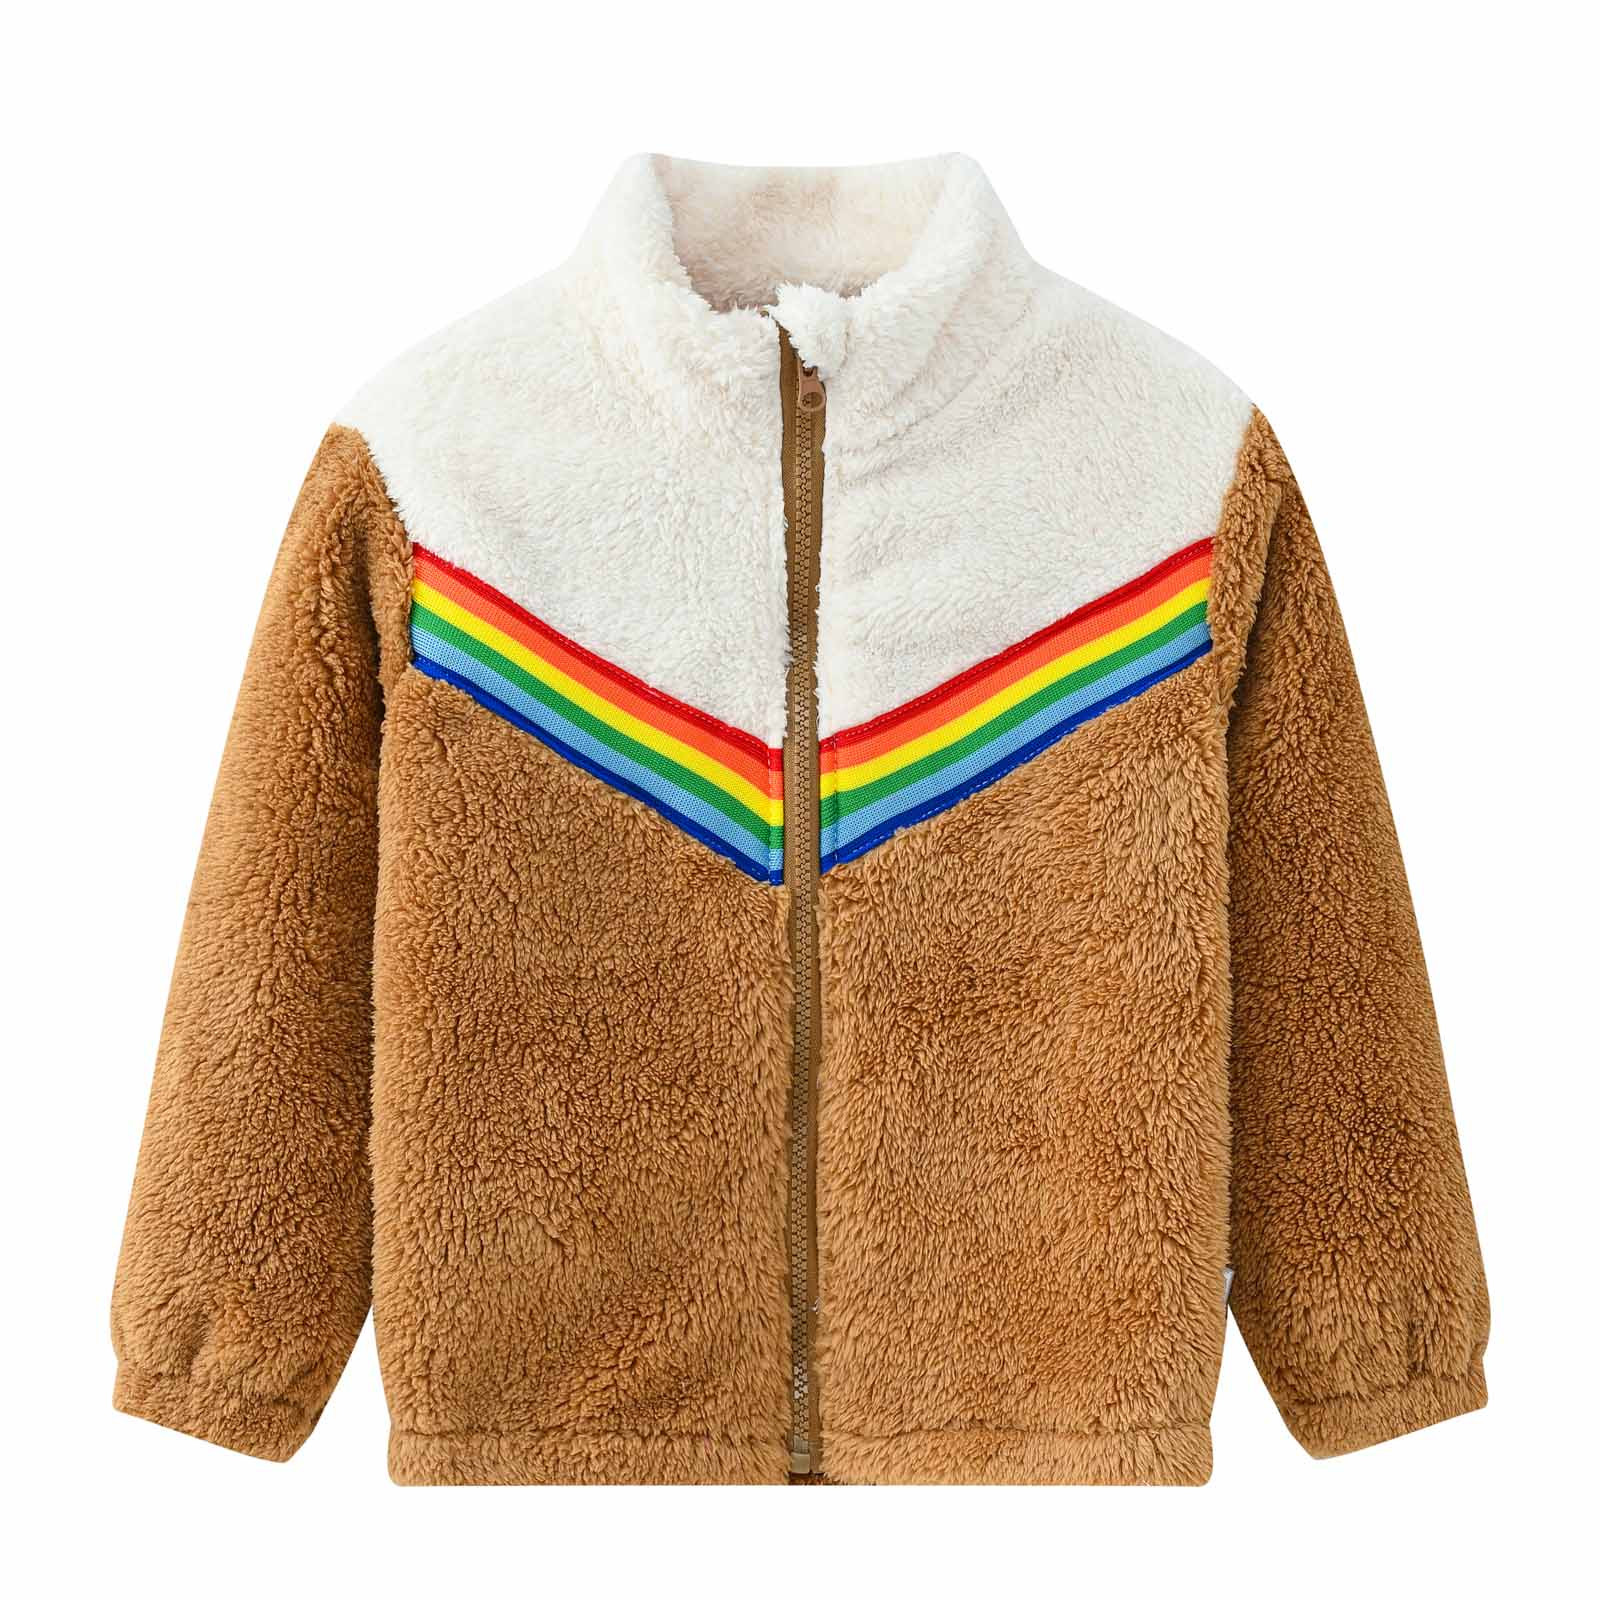 YYDGH Girls Zipper Jacket Fuzzy Sweatshirt Long Sleeve Casual Cozy Fleece Sherpa Outwear Coat Full-Zip Rainbow Jackets(Khaki,7-8 Years) - image 1 of 8